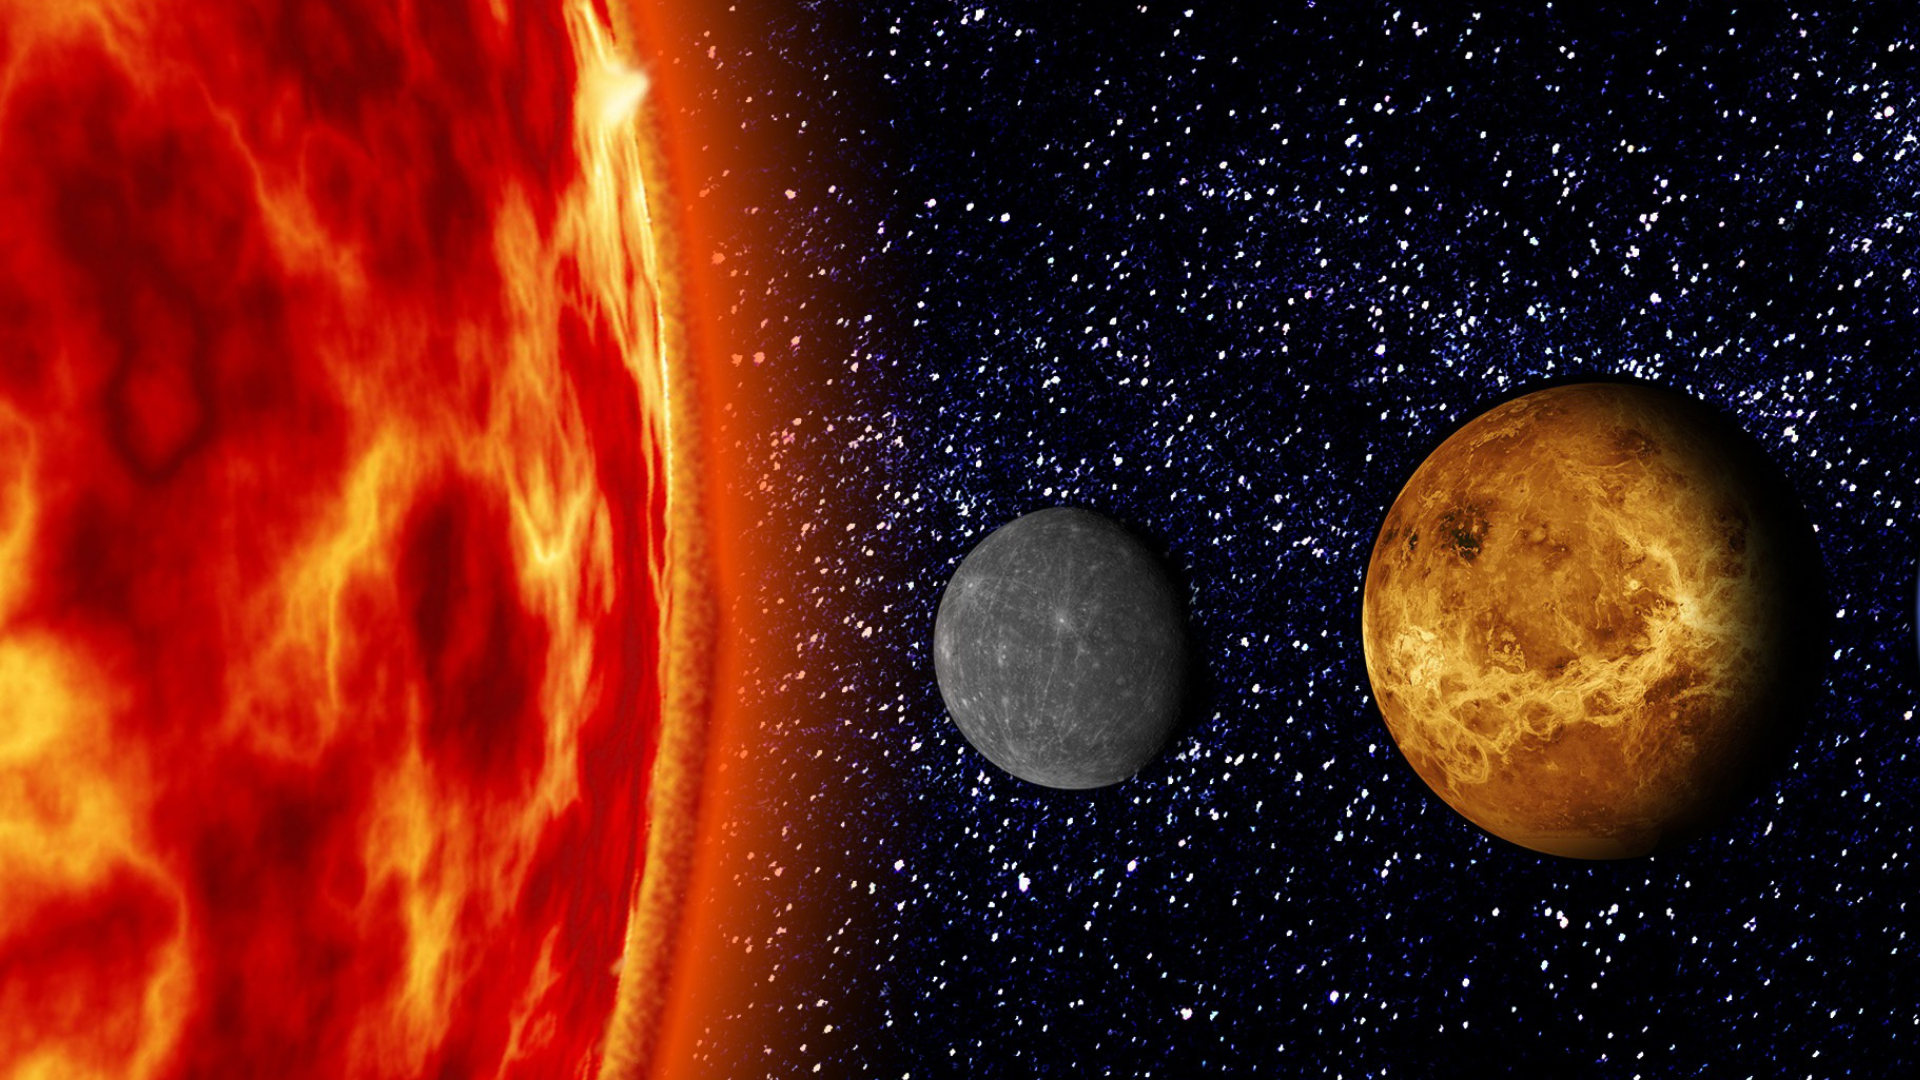 https://www.numerama.com/wp-content/uploads/2020/03/mercure-venus-soleil-espace-systeme-solaire.jpg